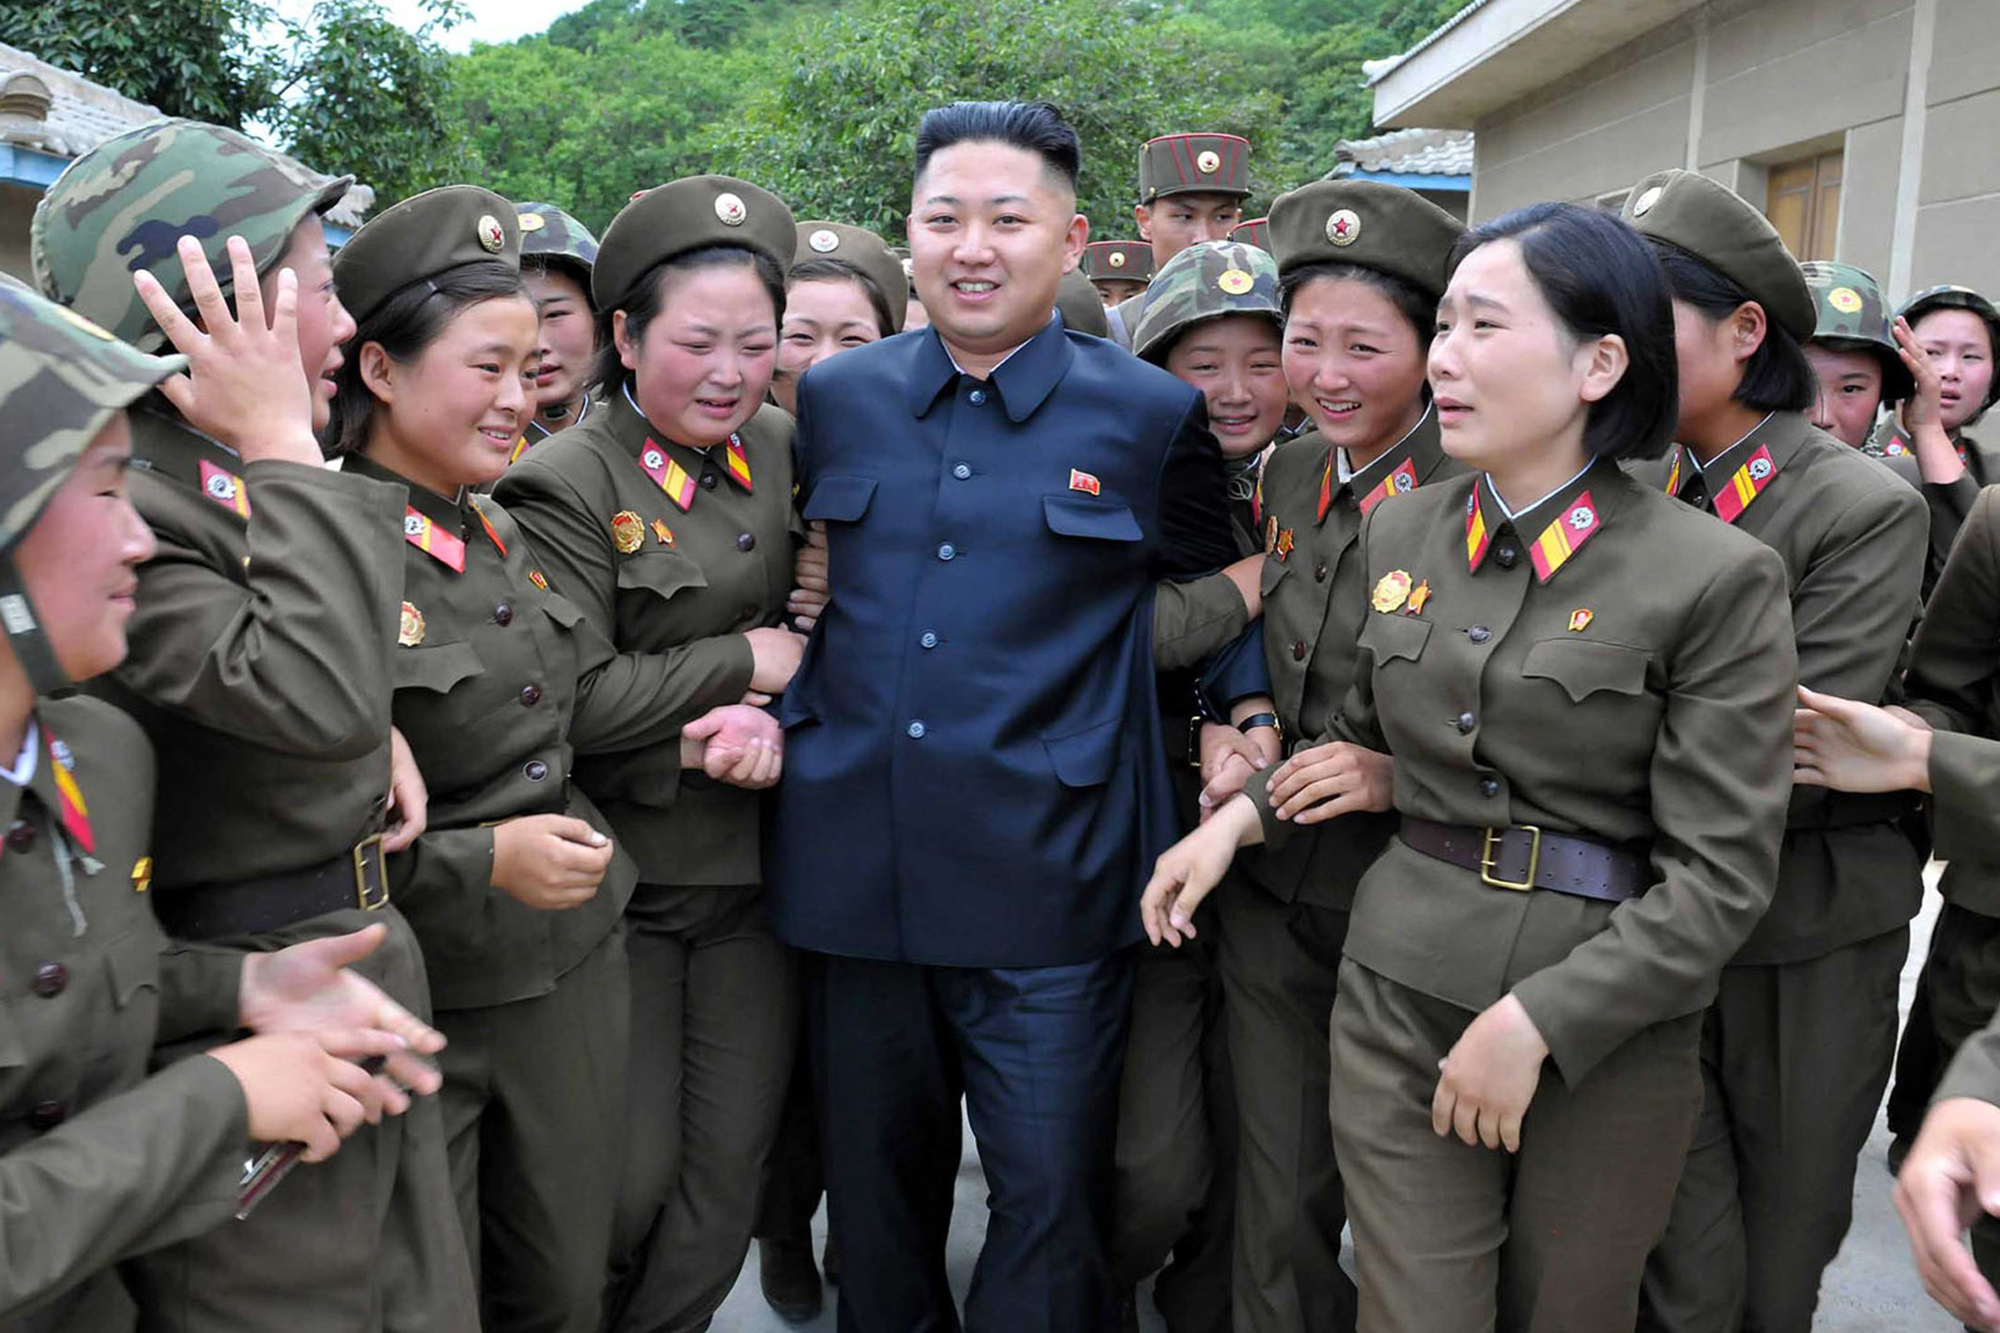 El escuadrón de placer de Kim Jong Un